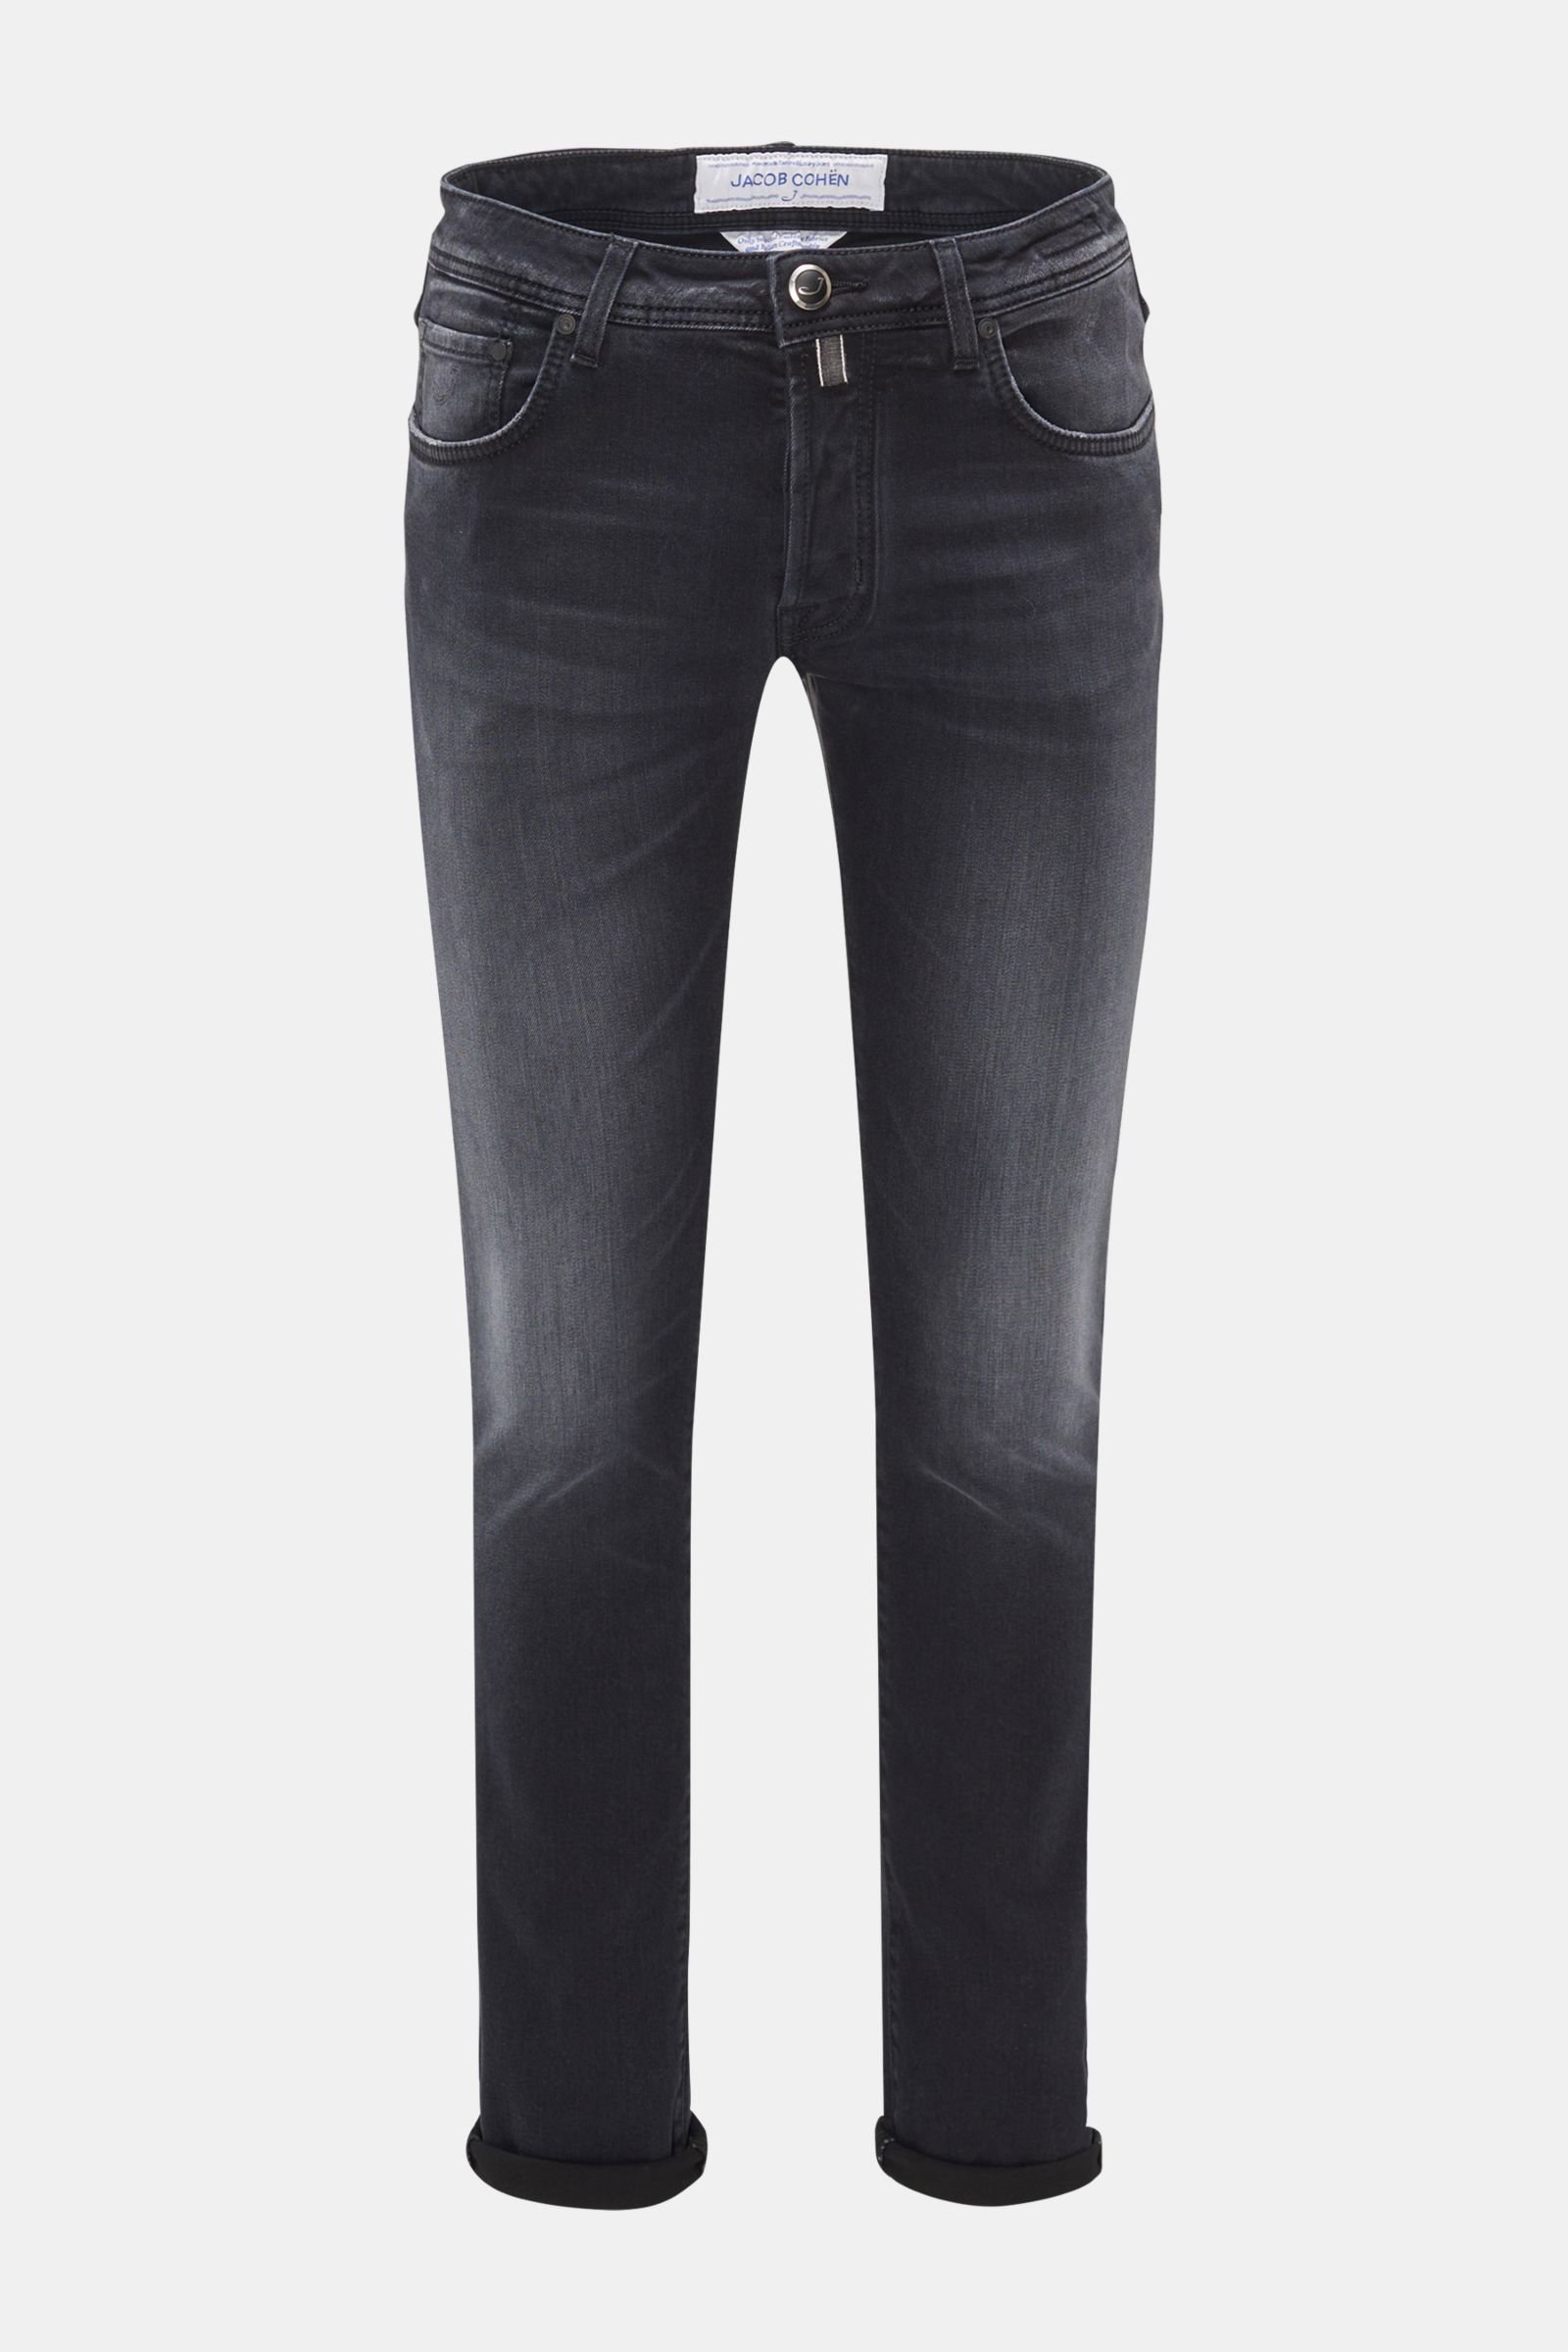 Jeans 'J688 Comfort Slim Fit' anthracite